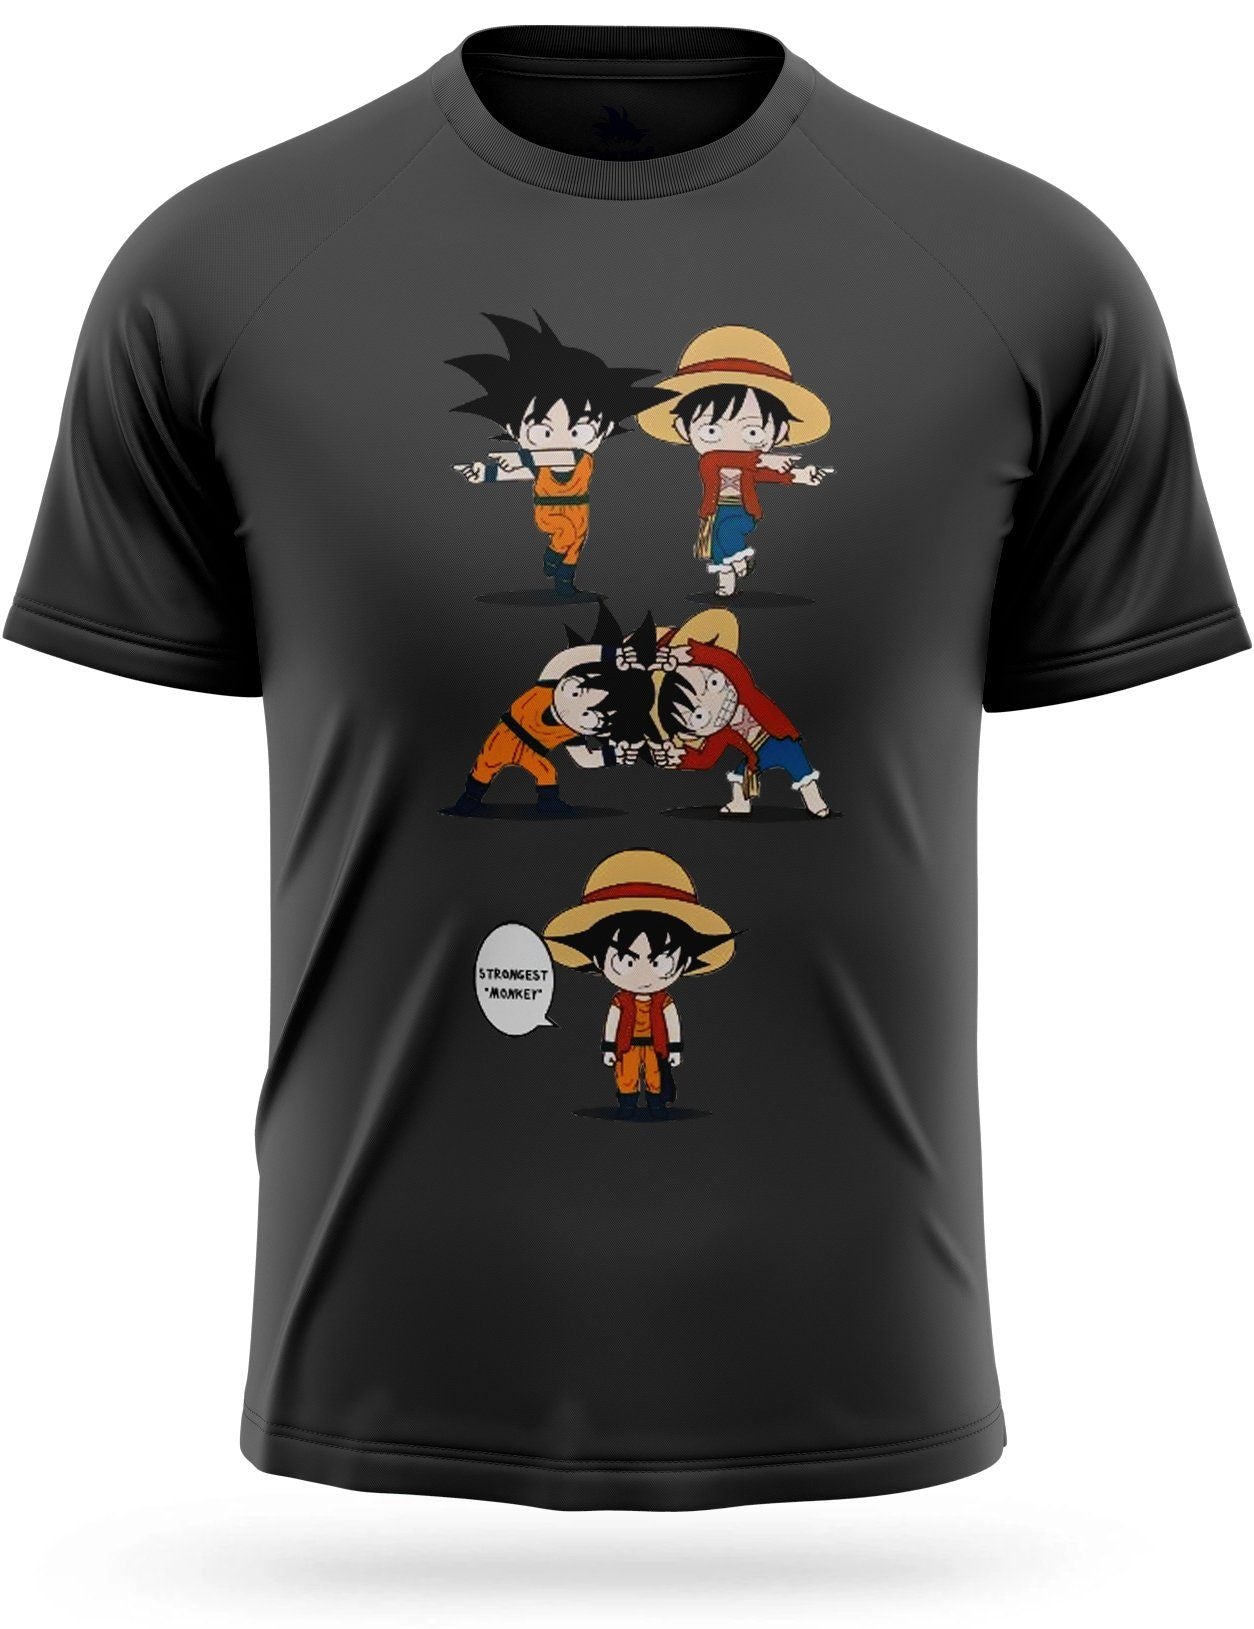 T-Shirt Dragon Ball Z Fusion Goku Luffy